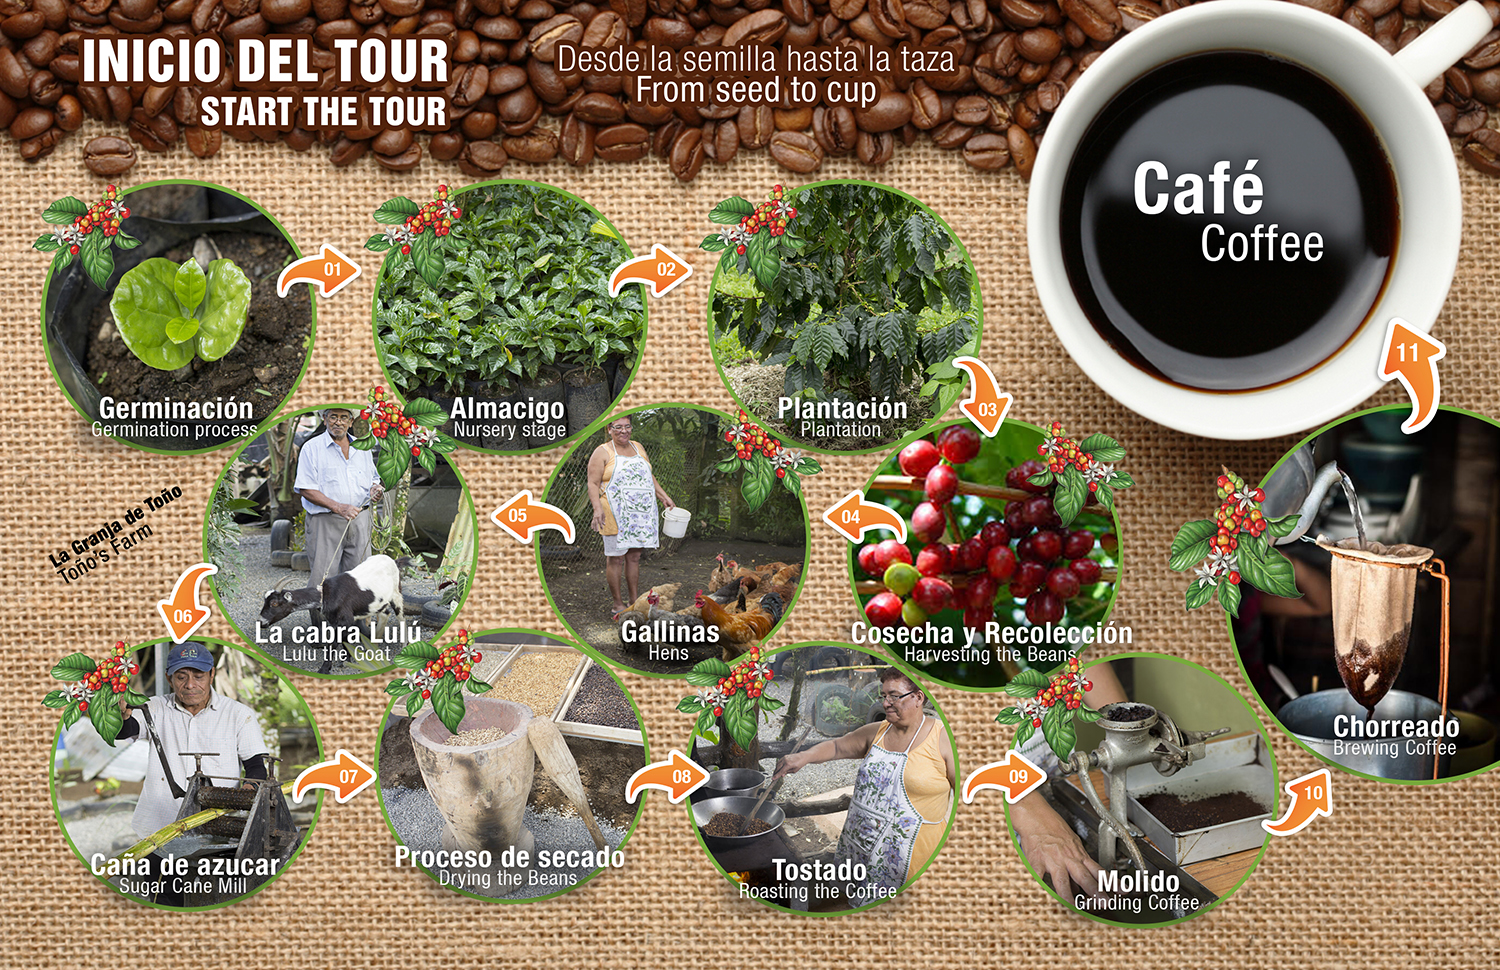 Coffee and chocolate tours